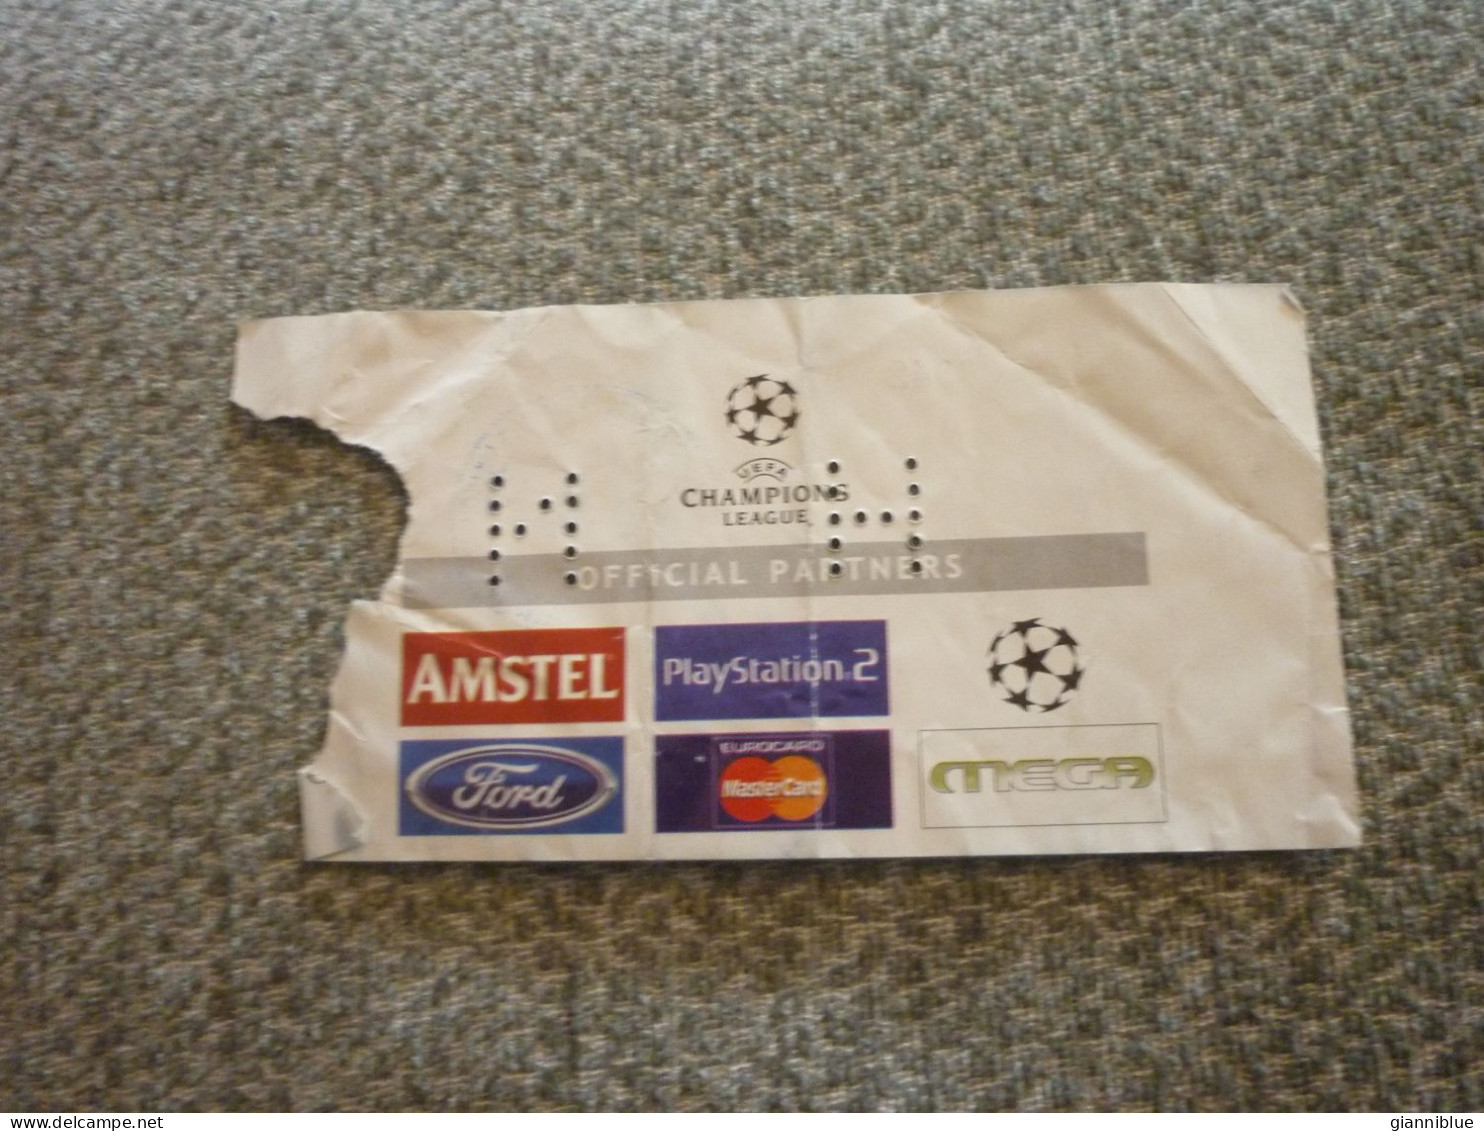 AEK-KRC Genk UEFA Champions League Football Match Ticket Stub 30/10/2002 (hologram) - Eintrittskarten